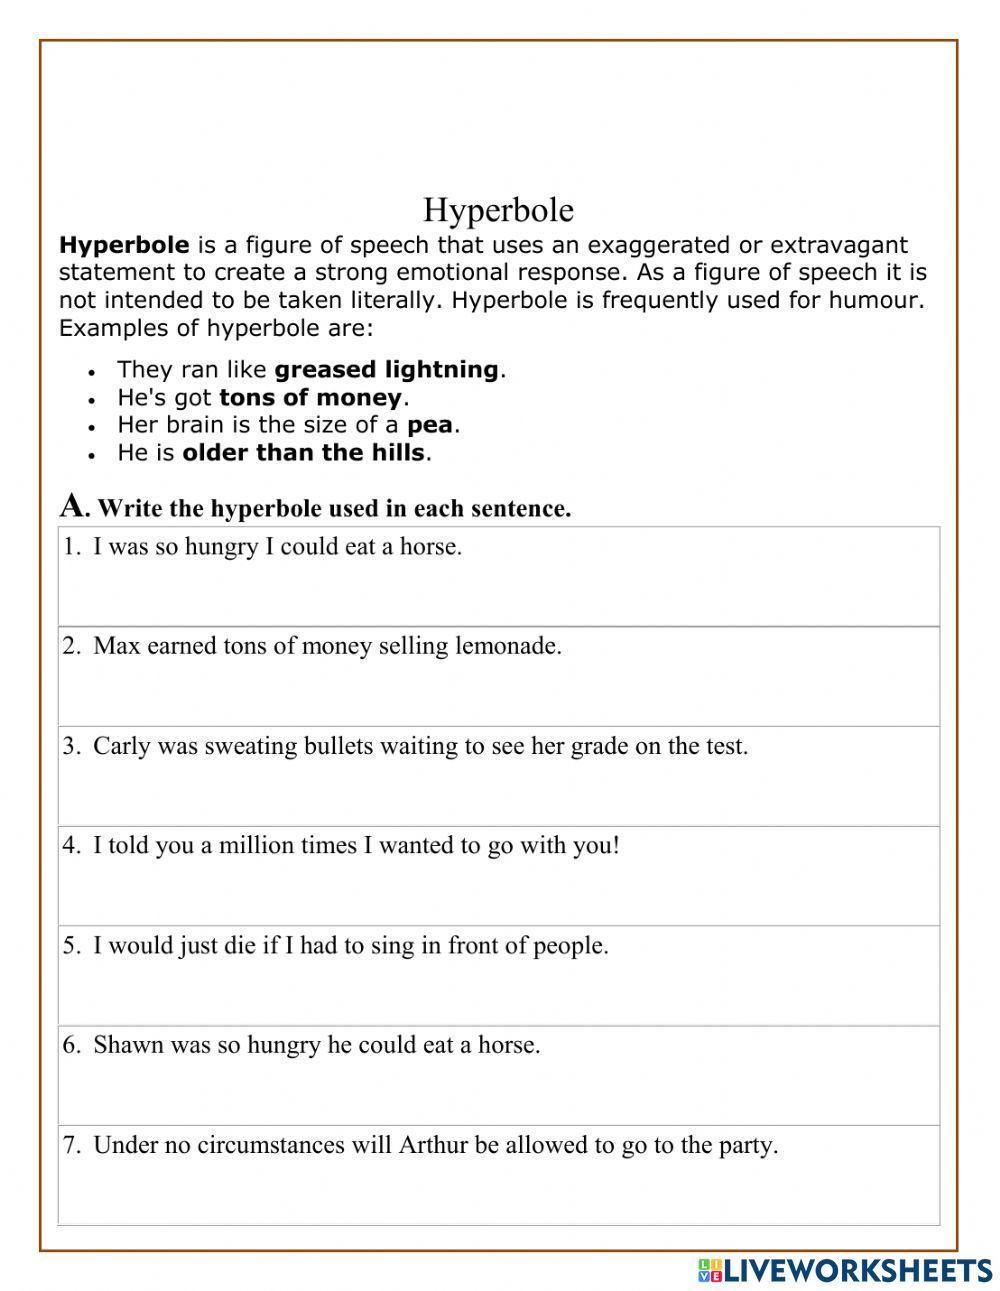 hyperbole-figurative-language-worksheet-live-worksheets